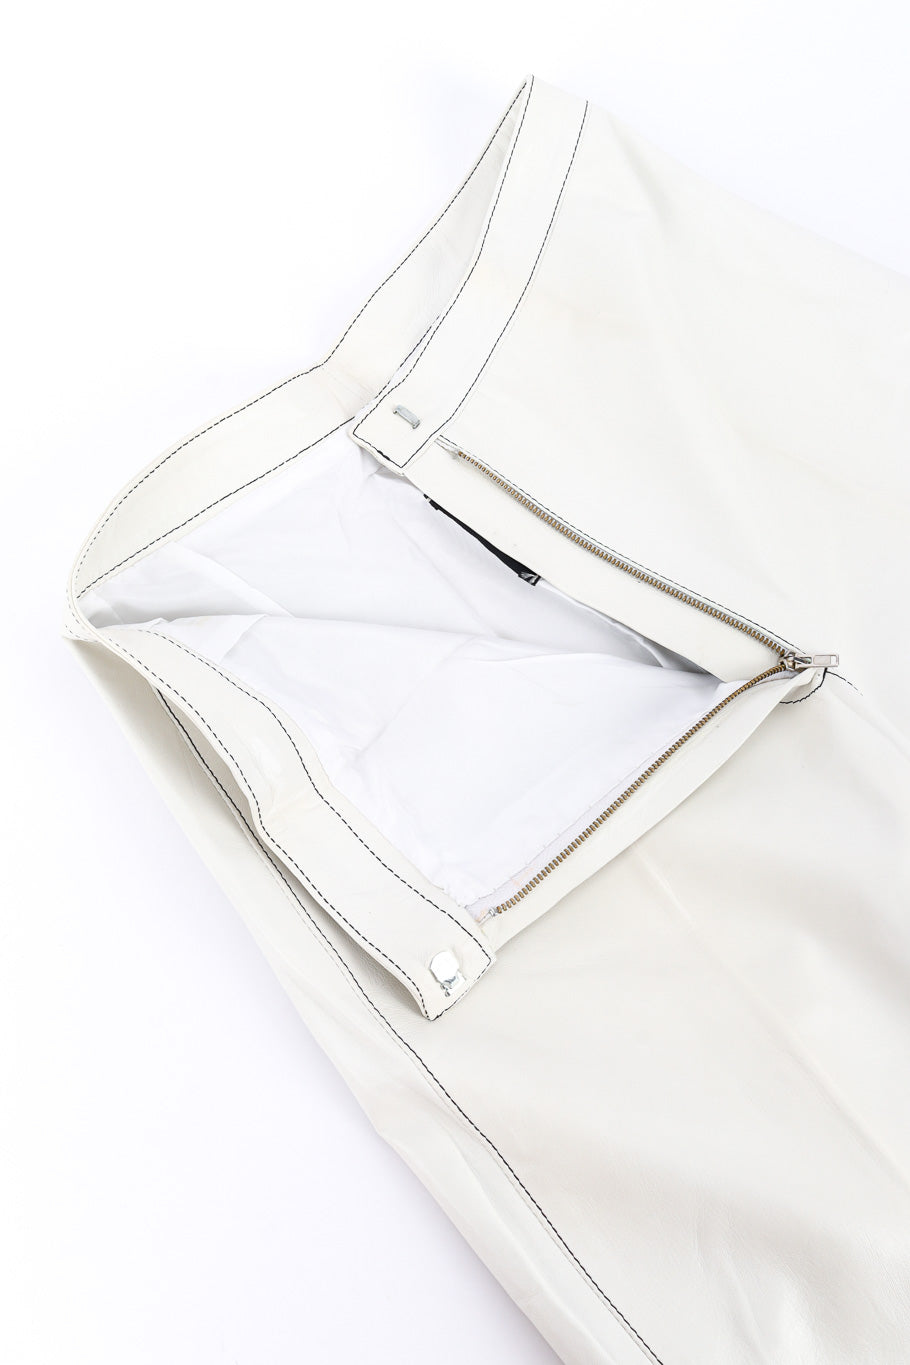 Vintage Estrella G Embroidered Leather Vest and Pant Set front view of pant unzipped @Recessla